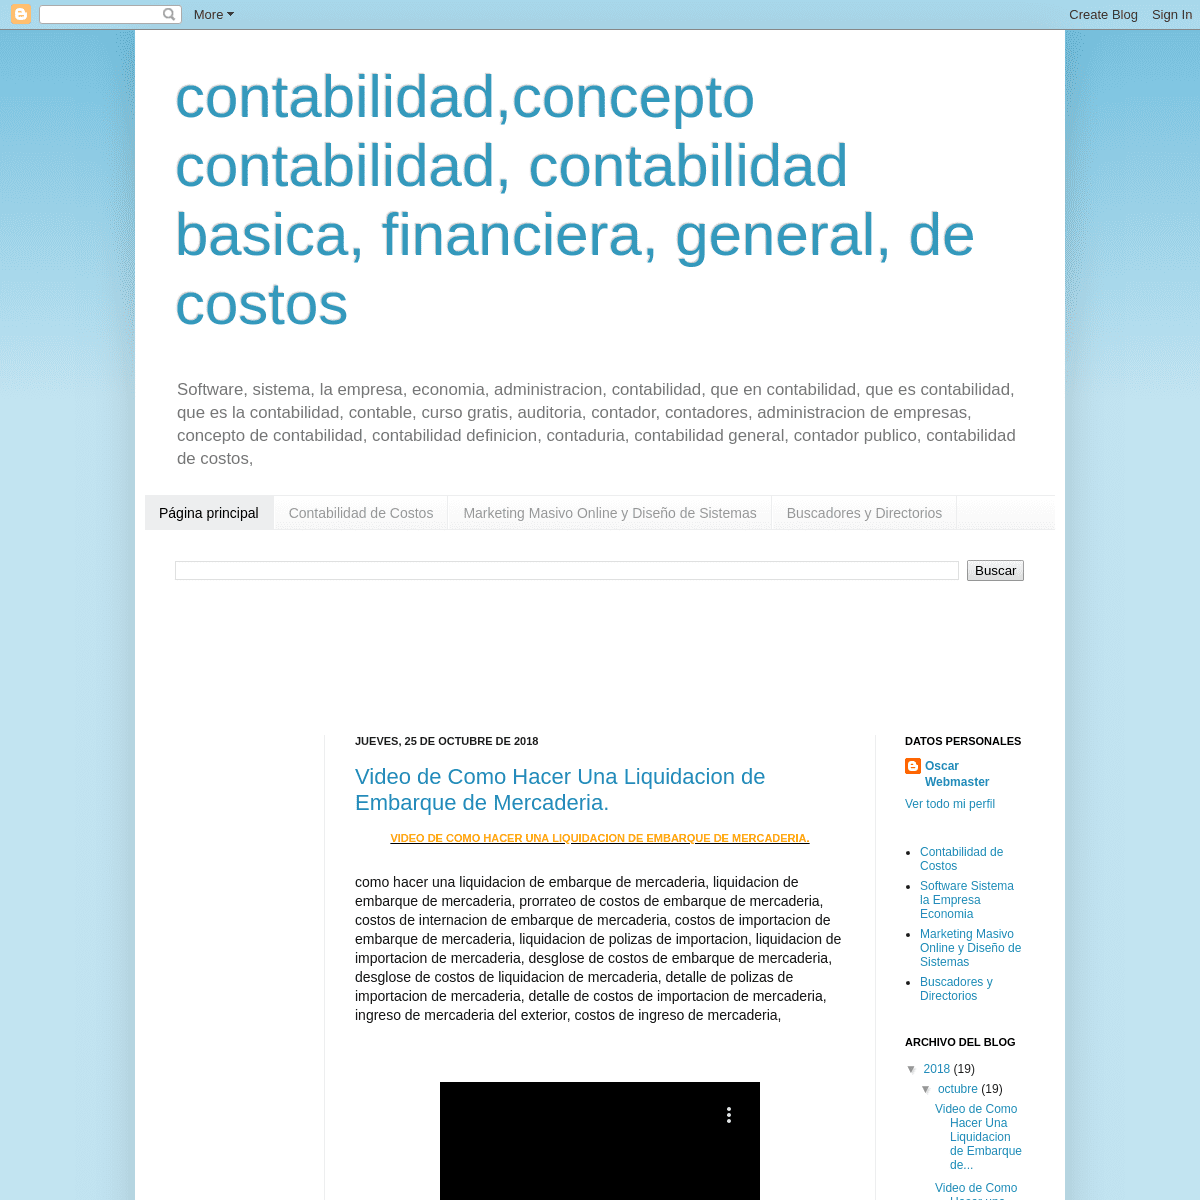 A complete backup of conceptocontabilidadbasicadecostos.blogspot.com